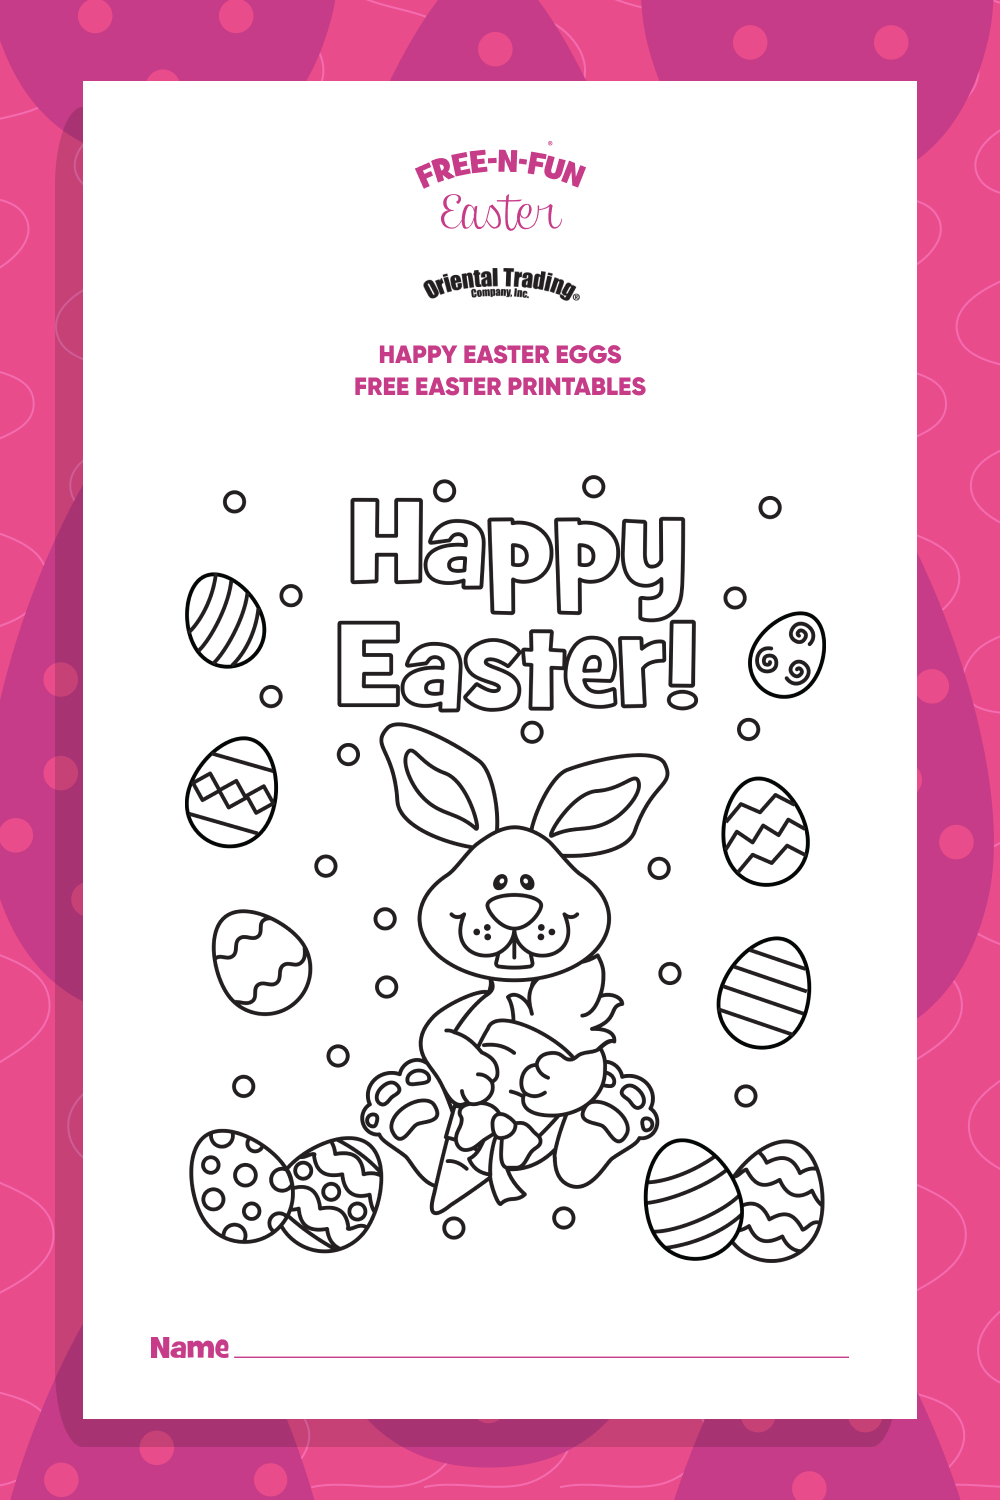 Happy Easter Eggs free easter printables pinterest image.